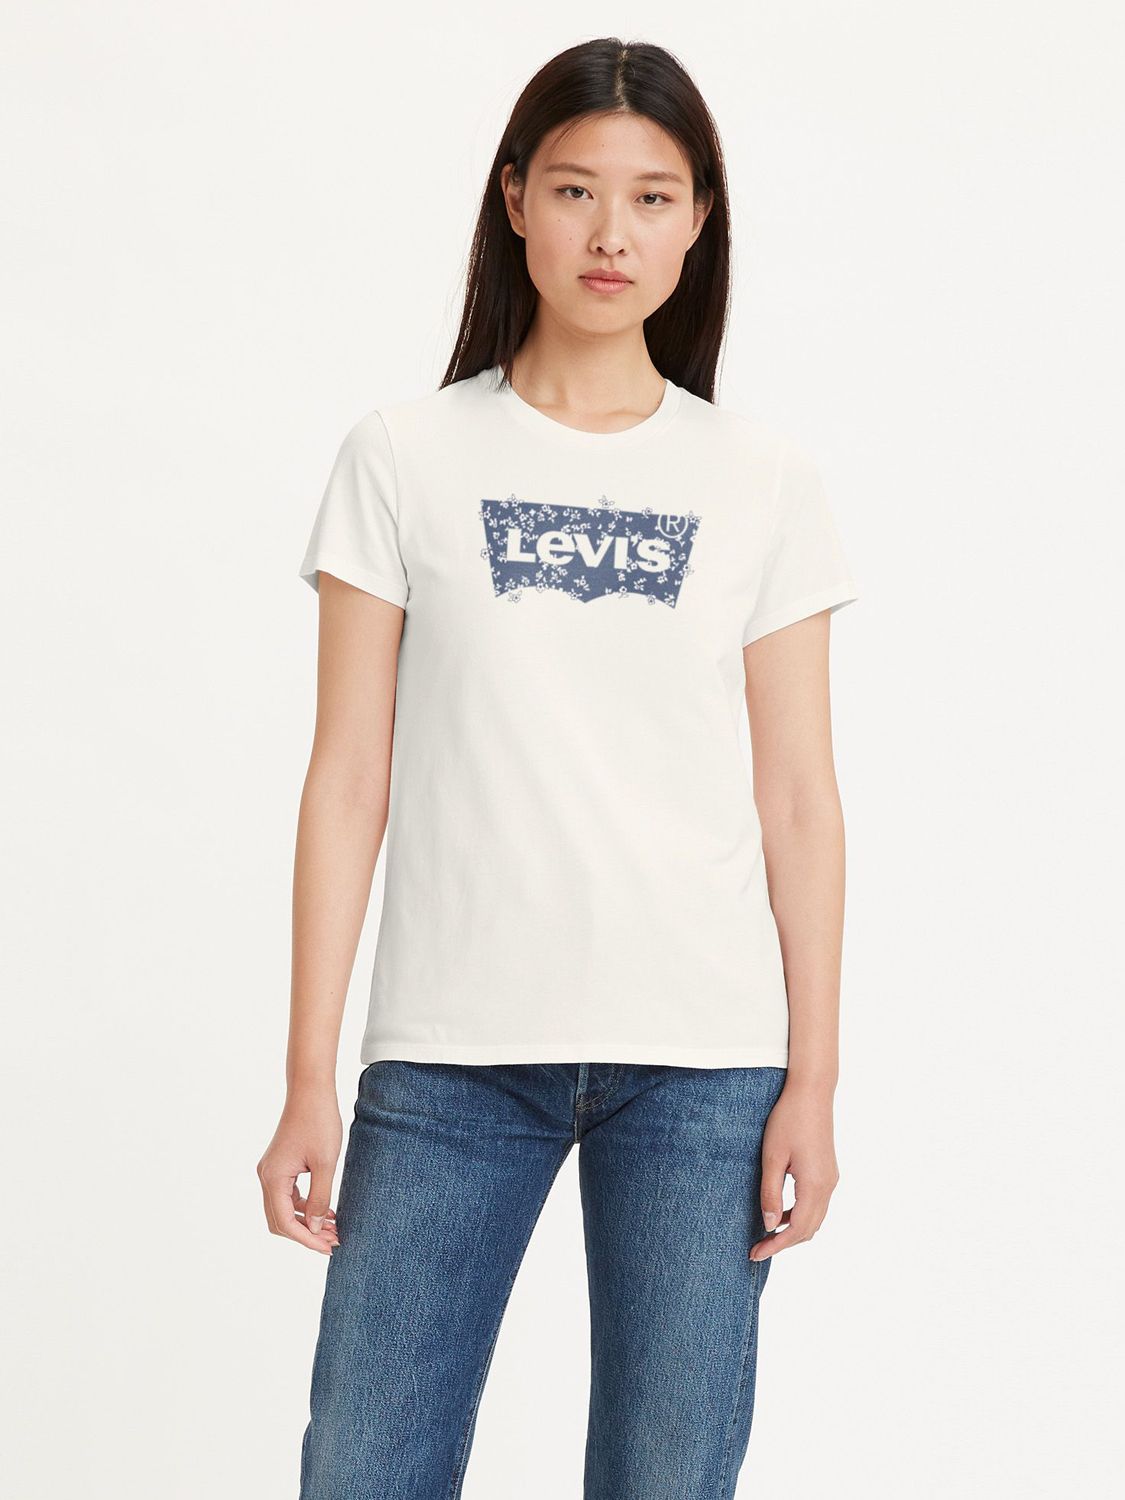 Идеальная футболка Levi's, мара цветочная цапля